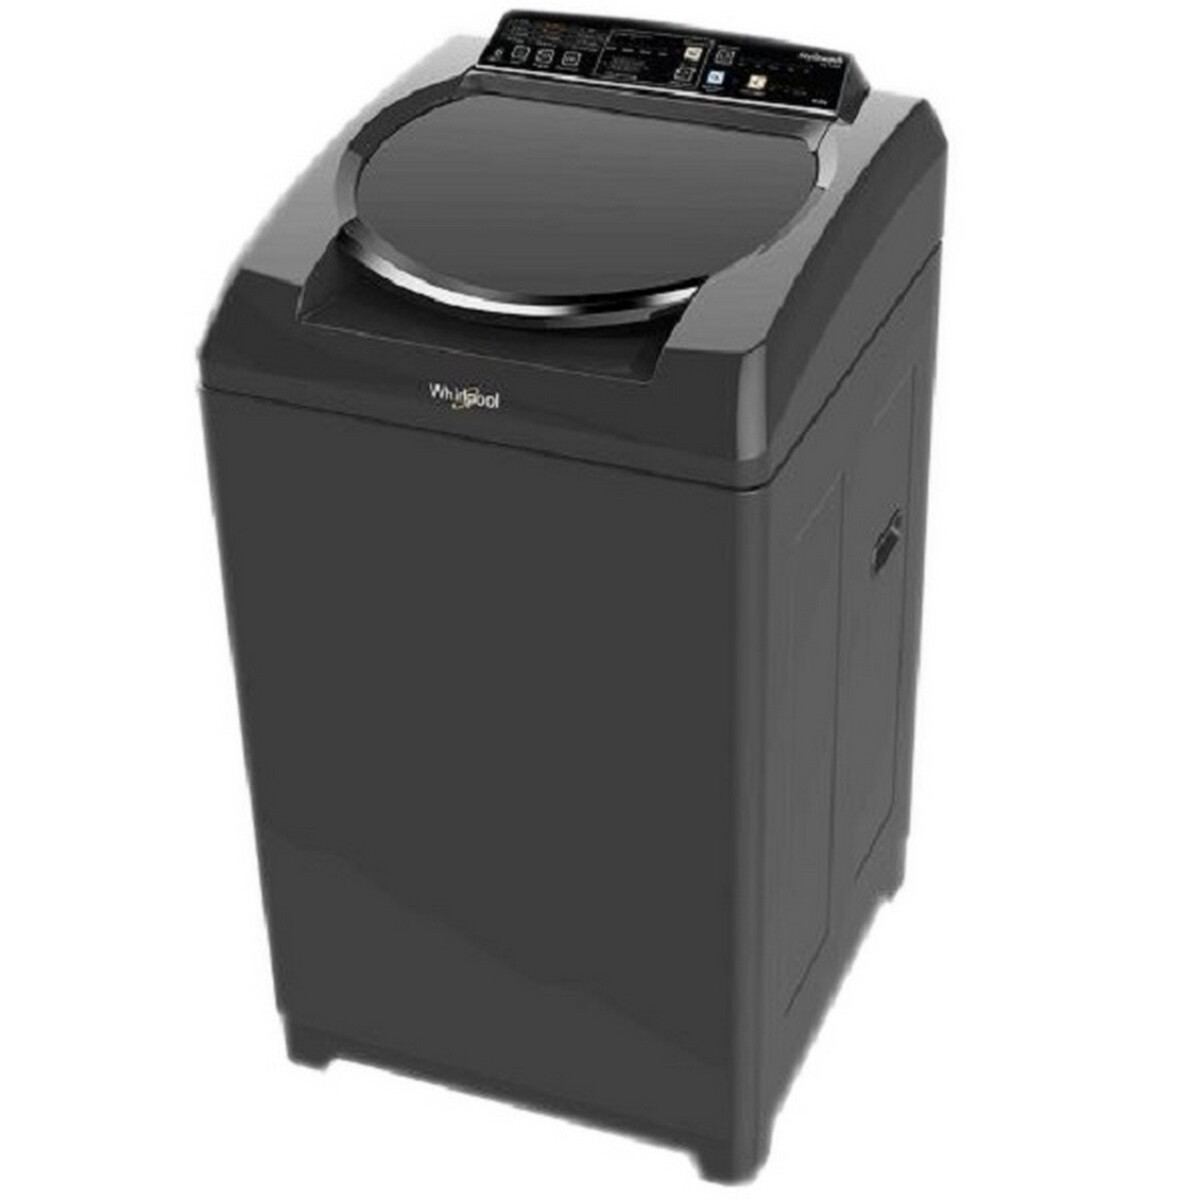 Whirlpool Fully Automatic Washing Machine Stainwash Ultra Grey 6.2kg